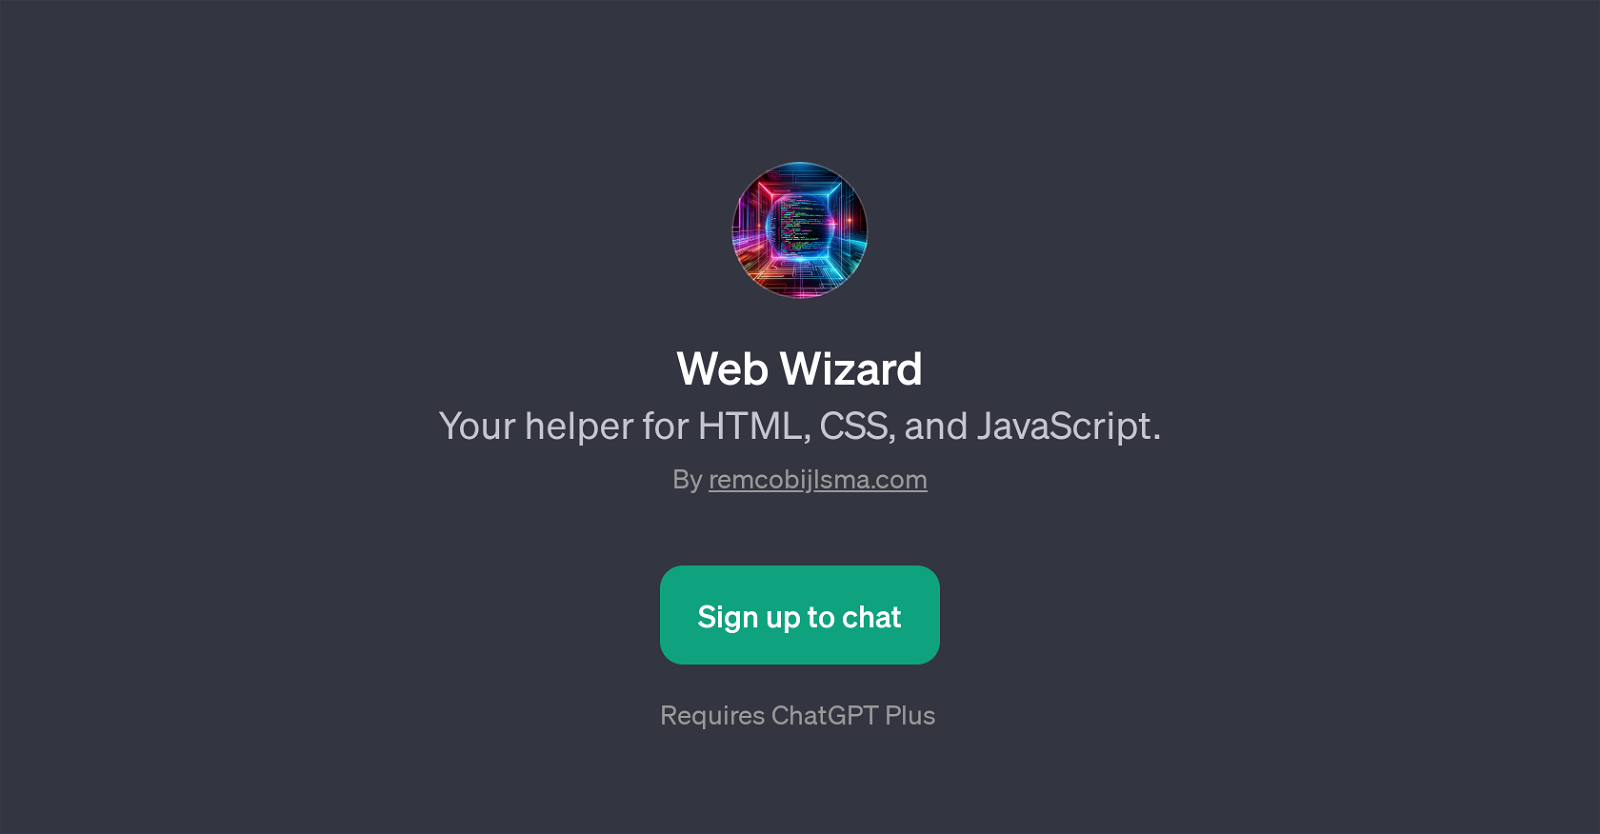 Web Wizard website